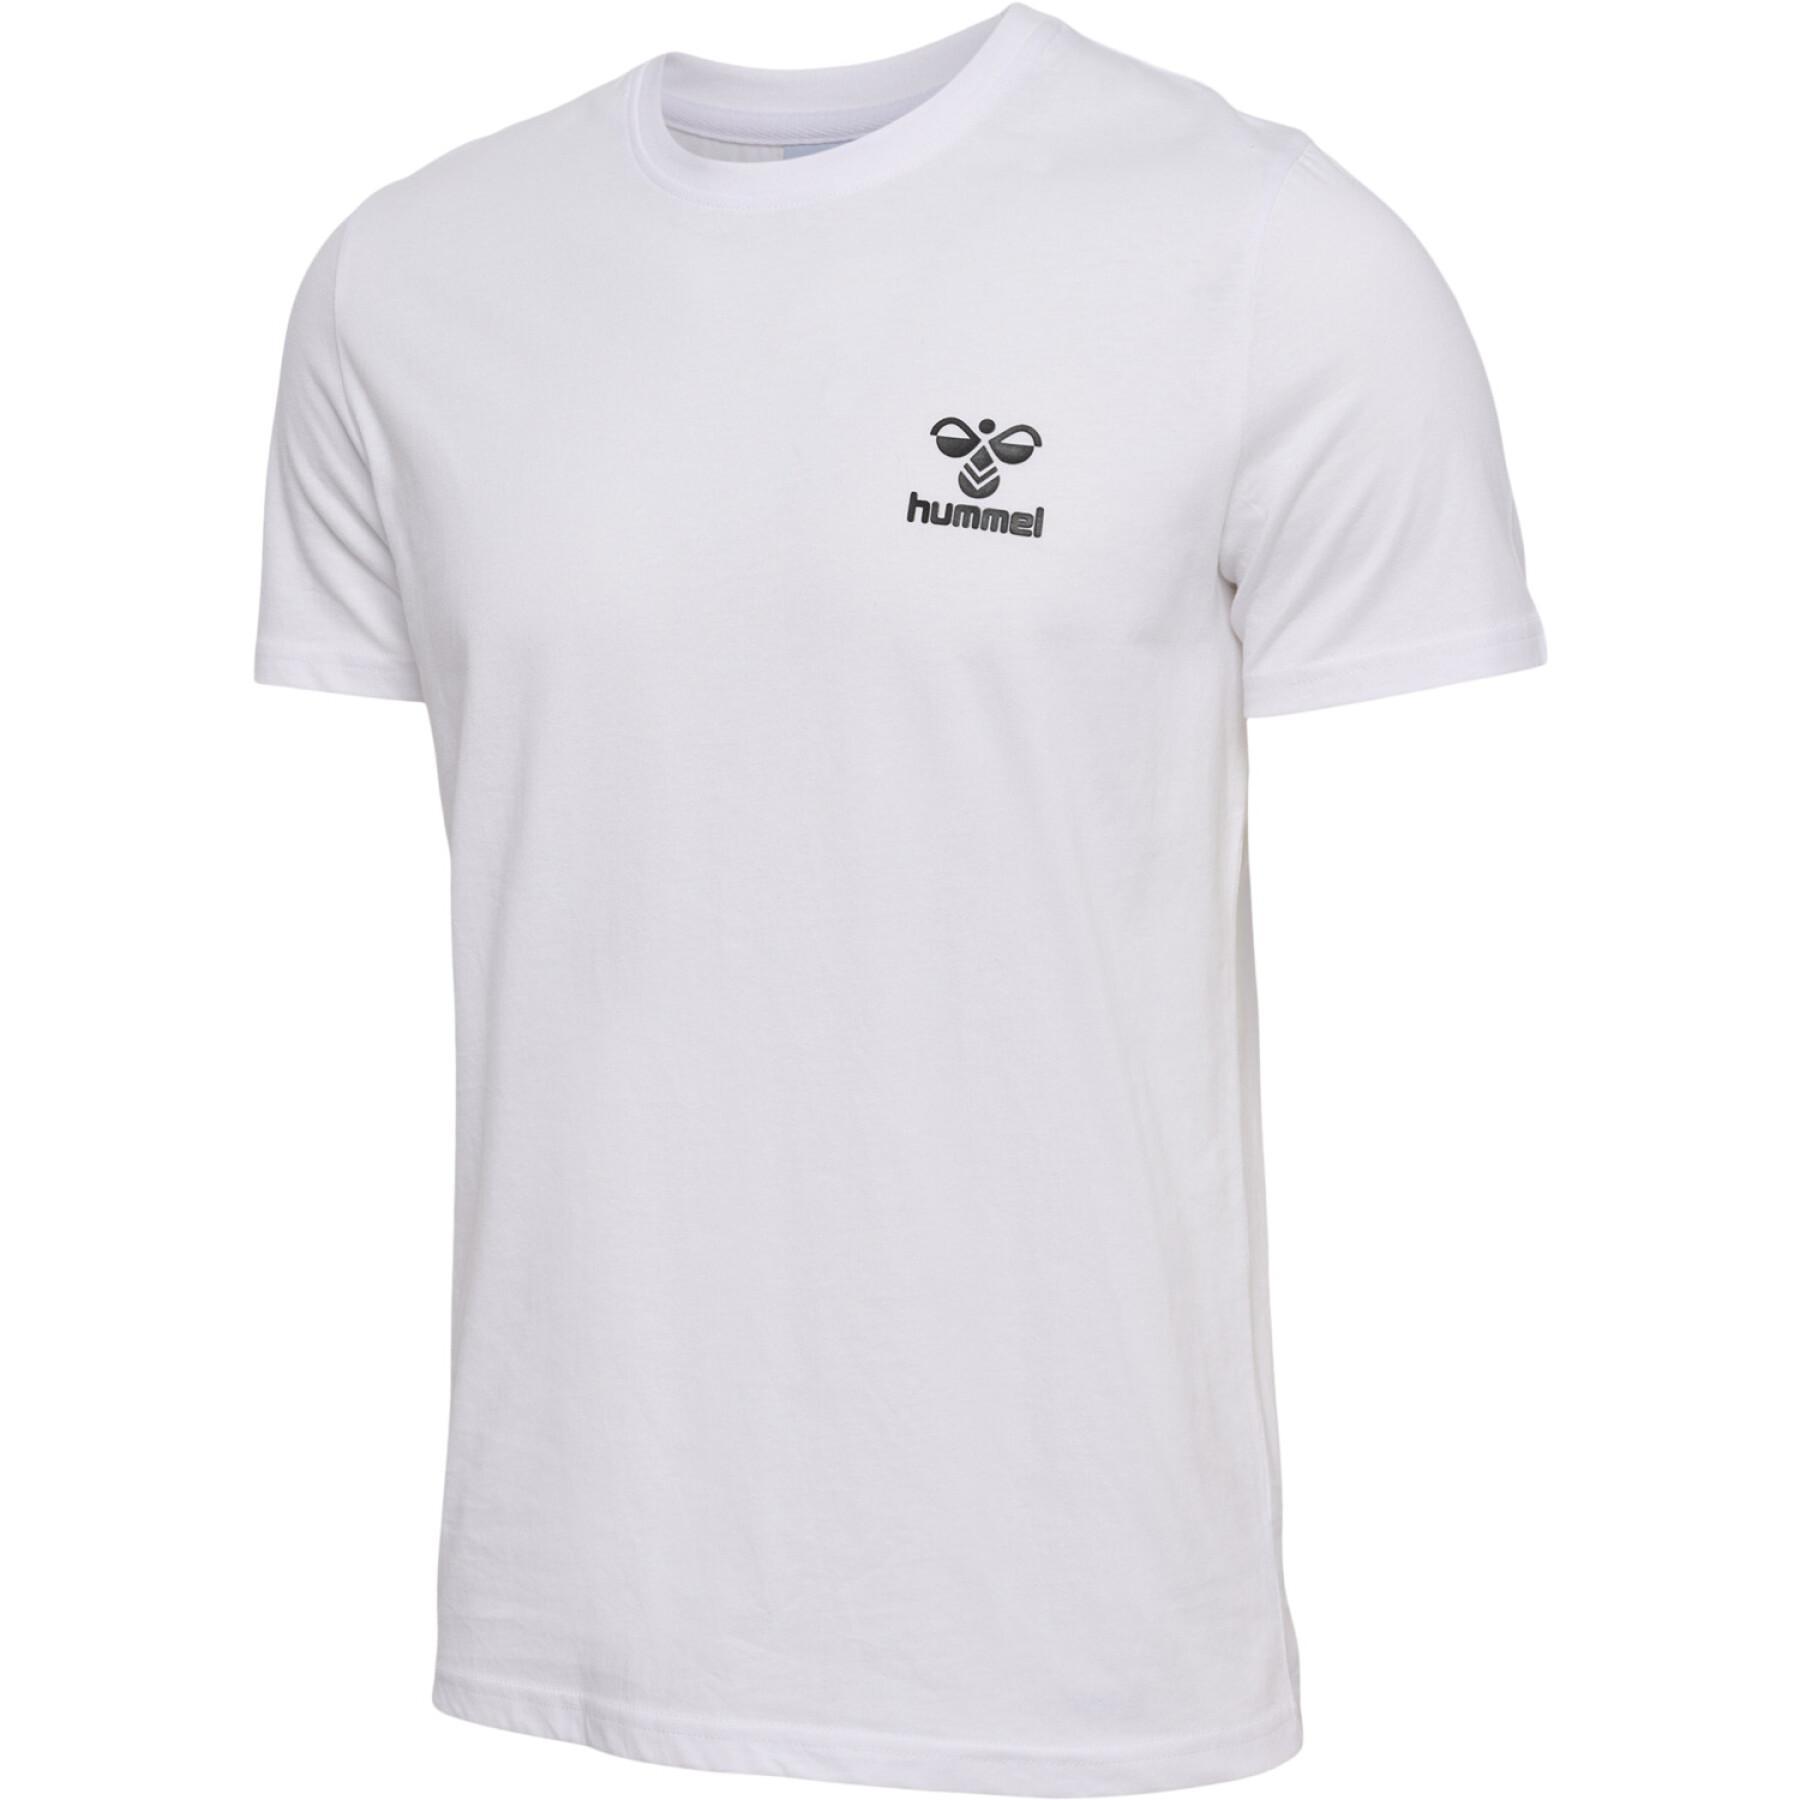 Brands - Icons T-shirt Hummel - Lifestyle - Hummel